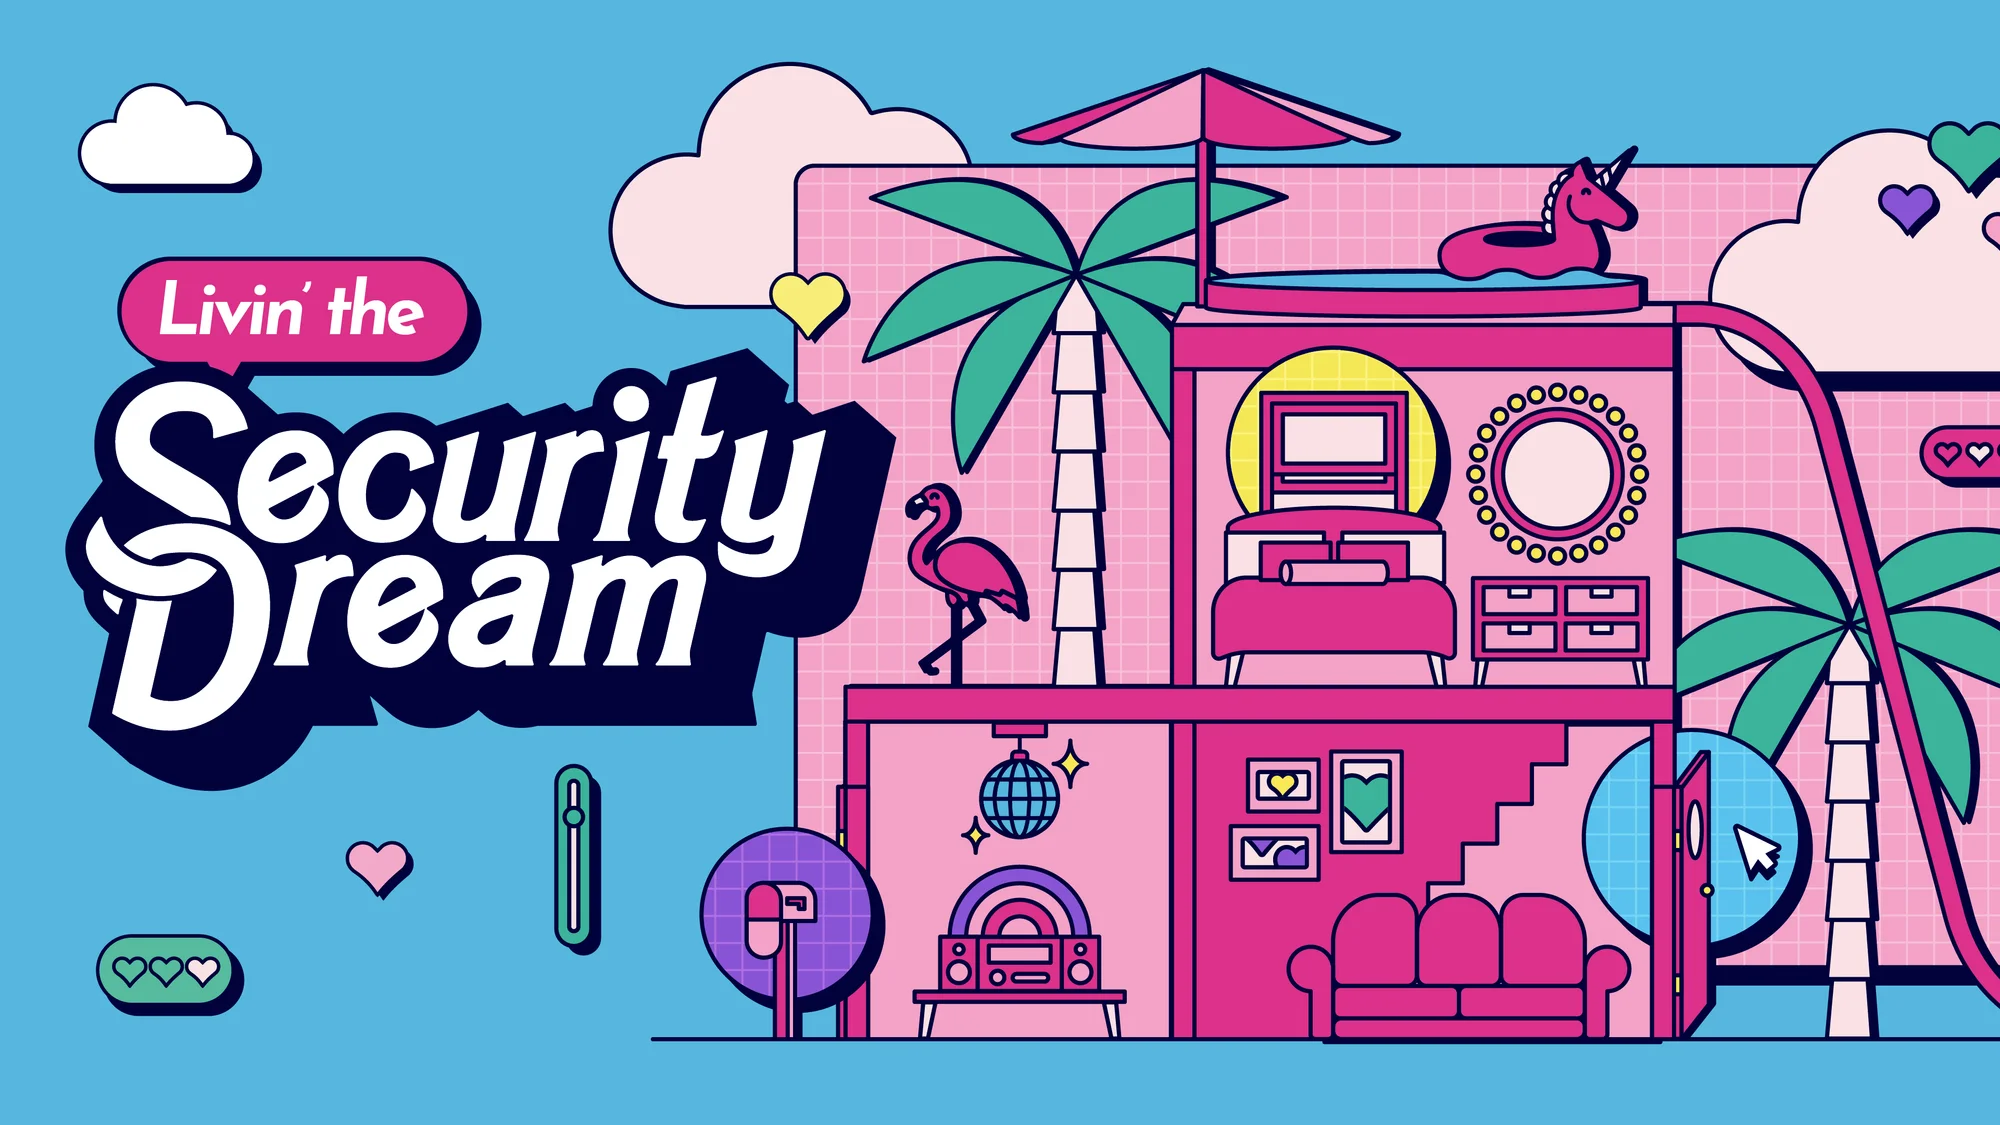 Barbie's dreamhouse: Livin' the security dream